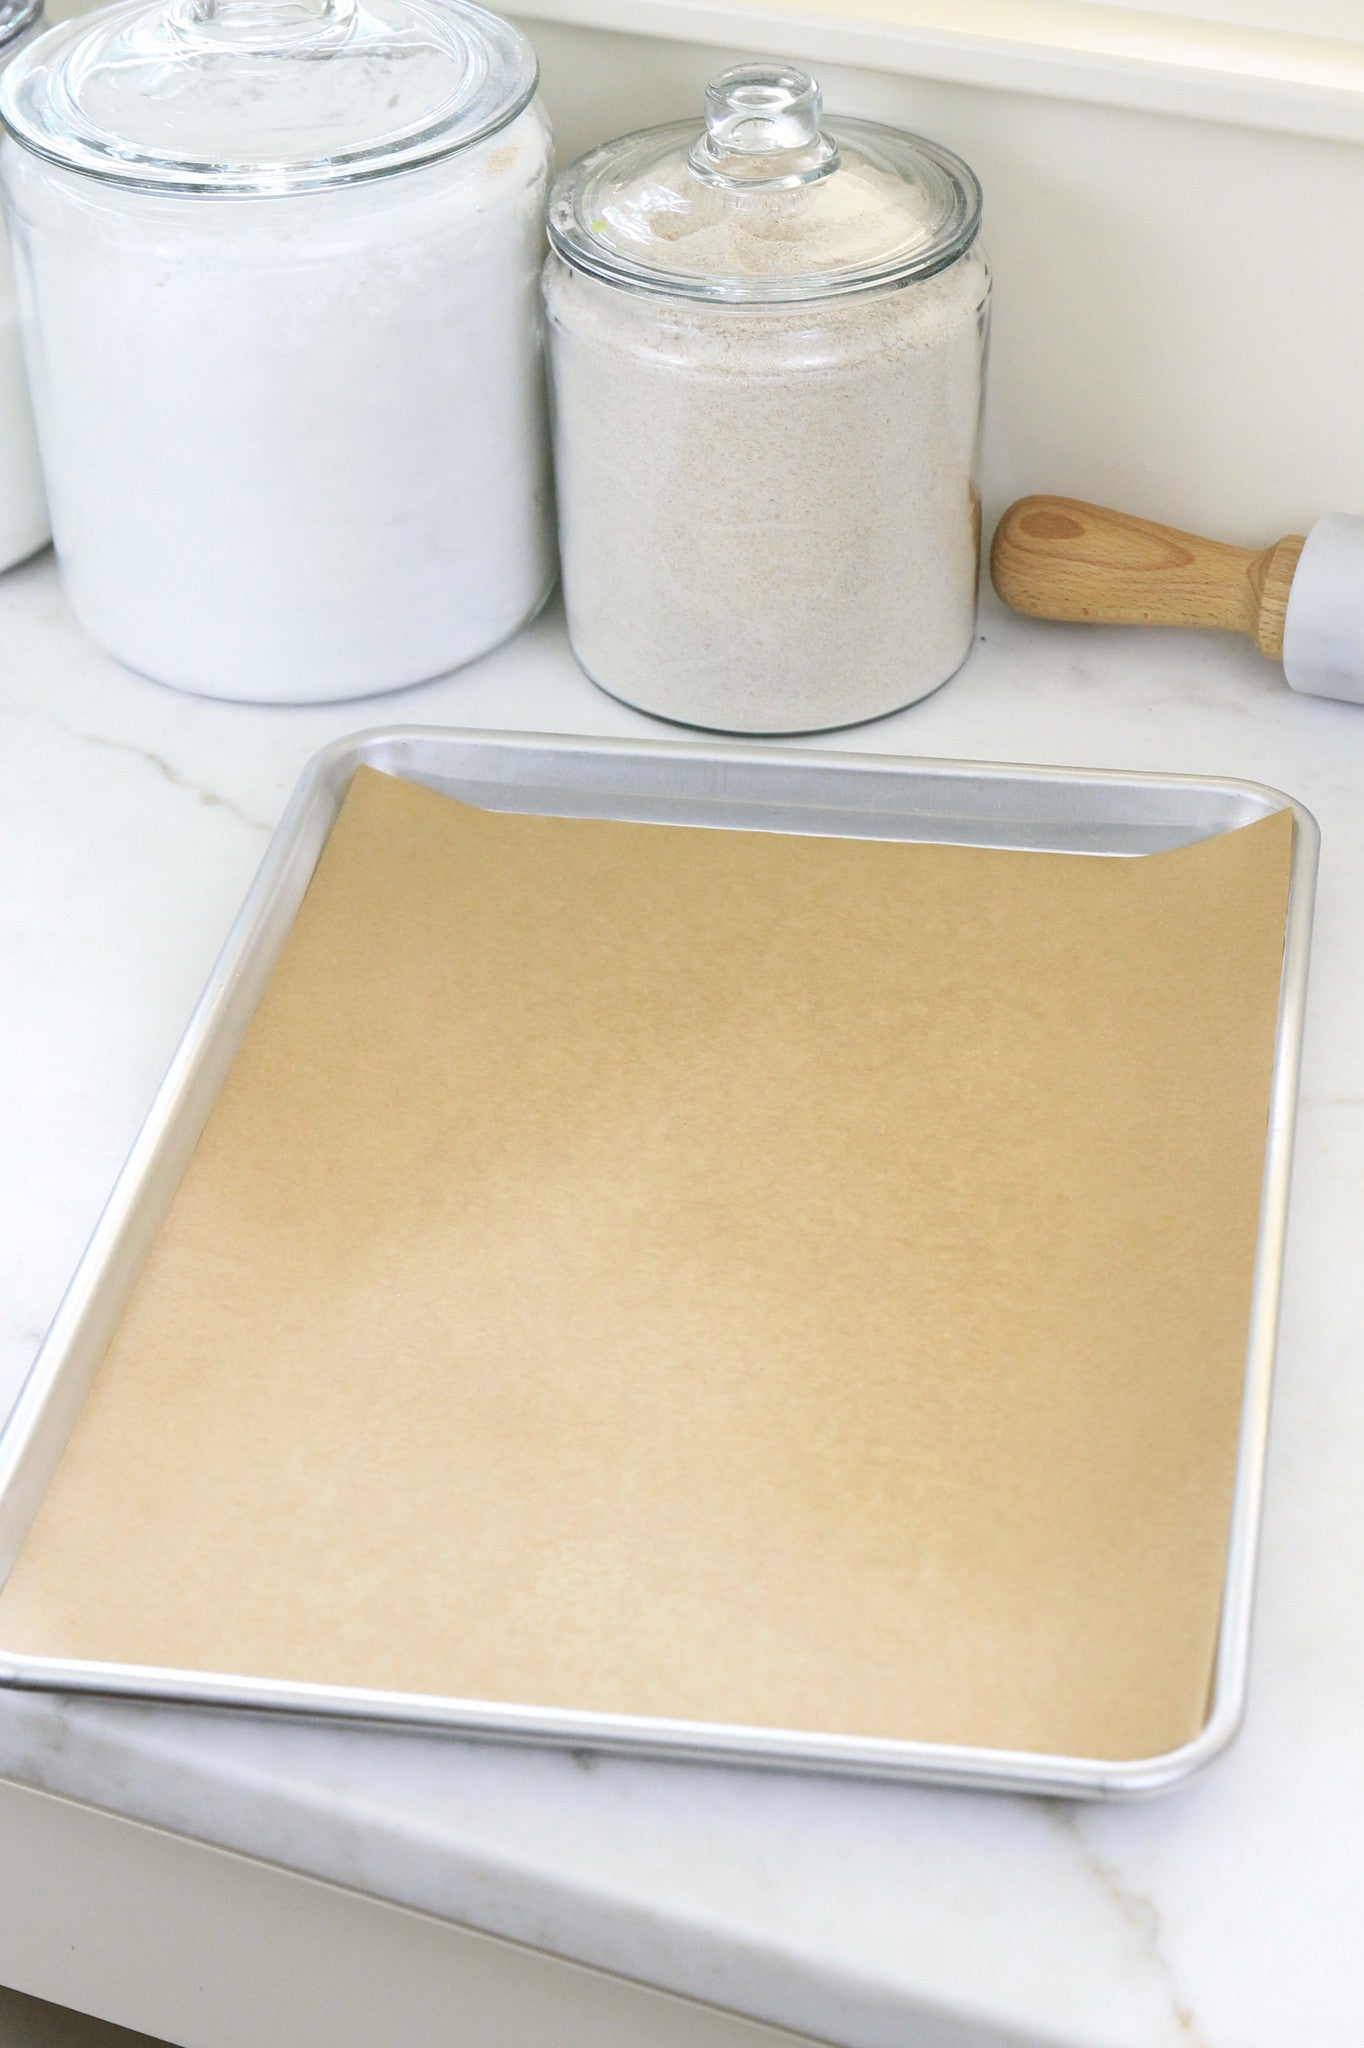 Geula - Bake it Parchment Paper High Quality 30 Sheets – ISRAELI  SUPERMARKET ONLINE